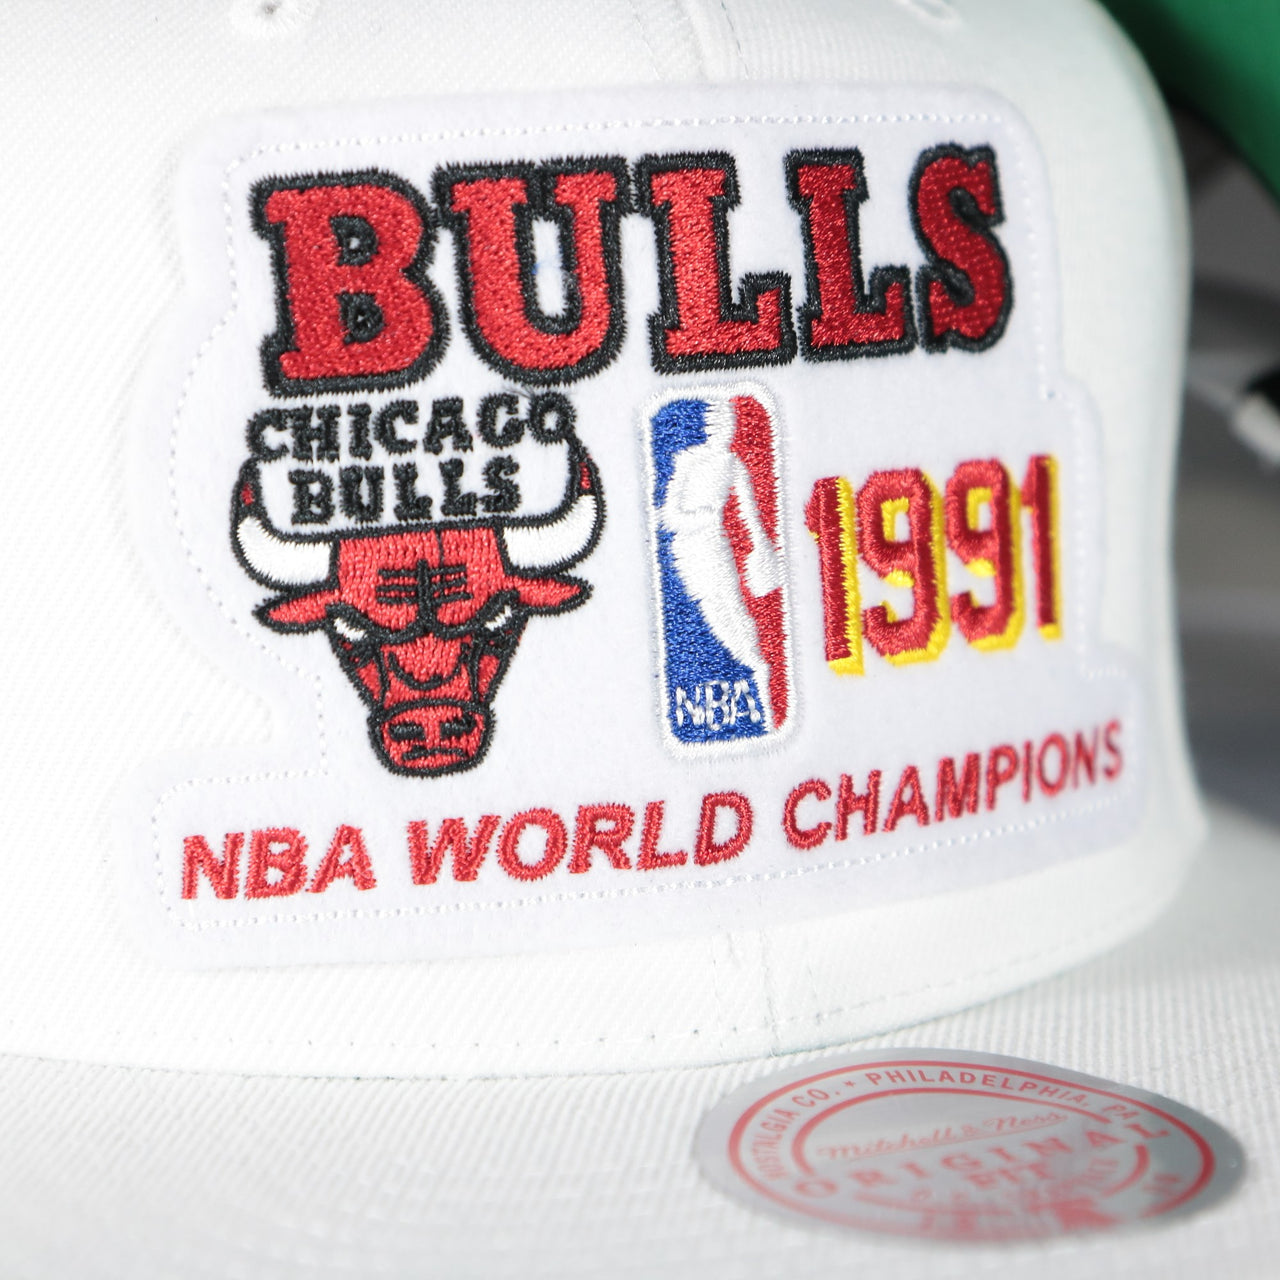 Chicago Bulls 1991 NBA World Champions Green Bottom | White Snapback Hat